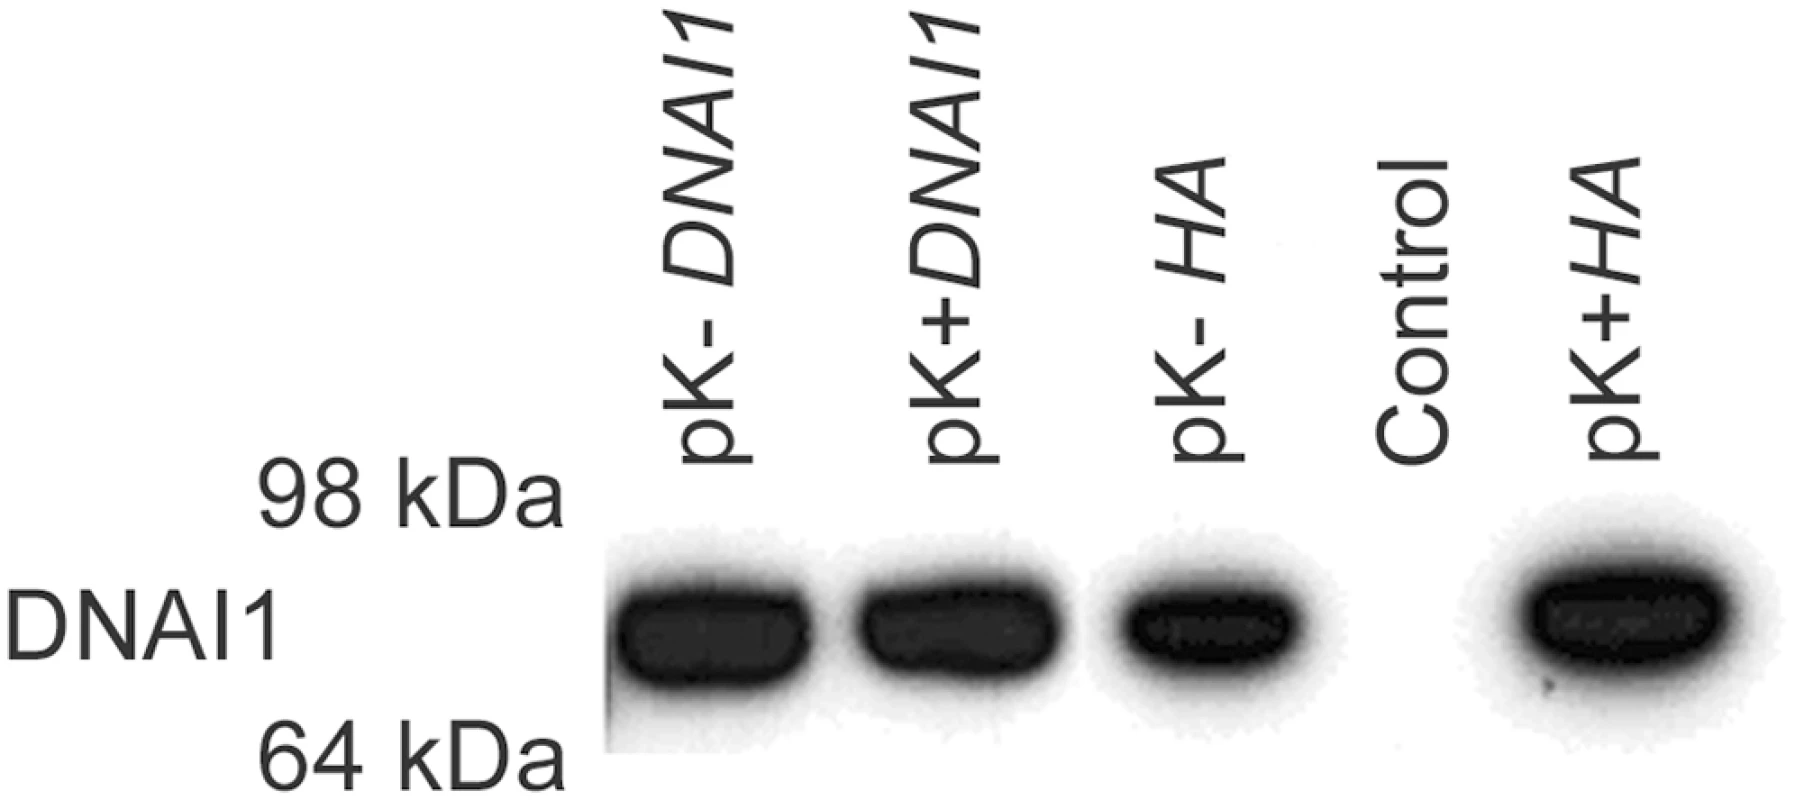 DNAI1 protein detection with the use of DNAI1 anti-dyn69 antibody.